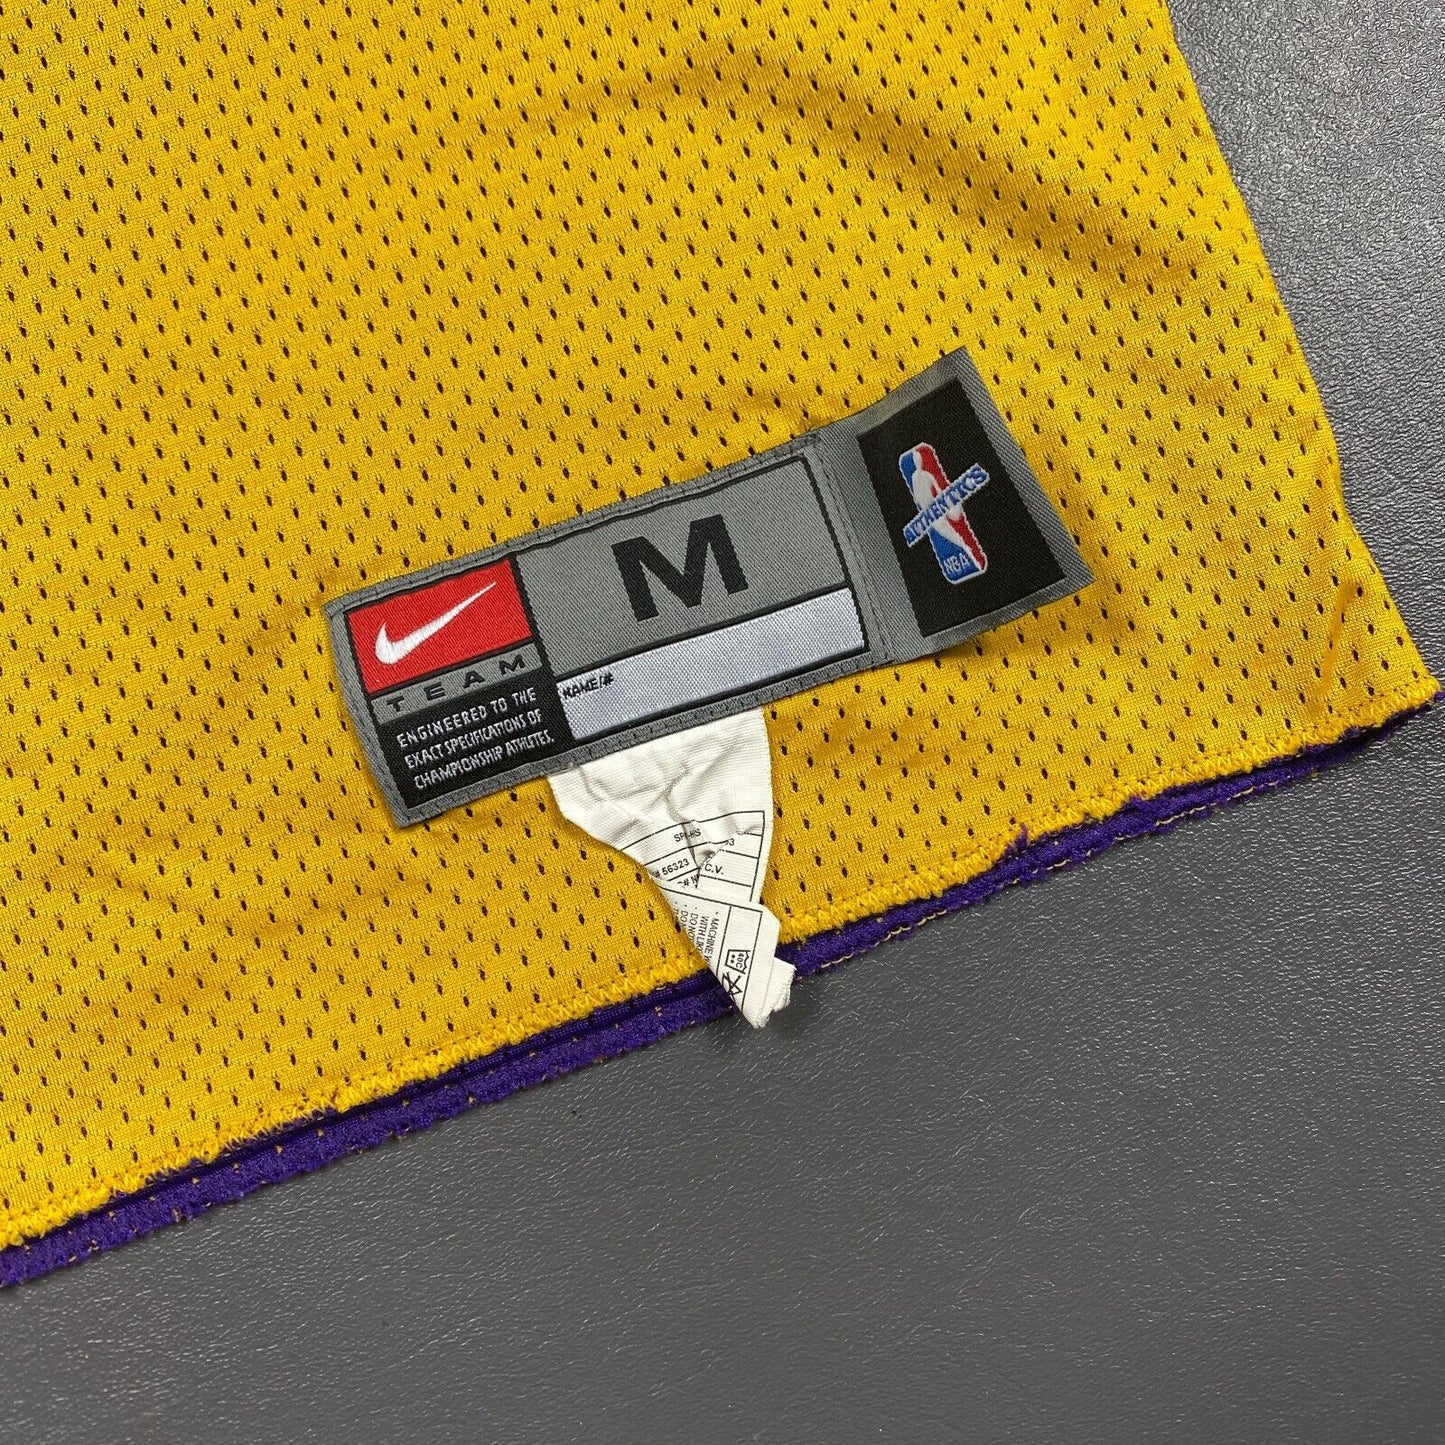 100% Authentic Kobe Bryant Vintage Nike Los Angeles Lakers Practice Jersey M